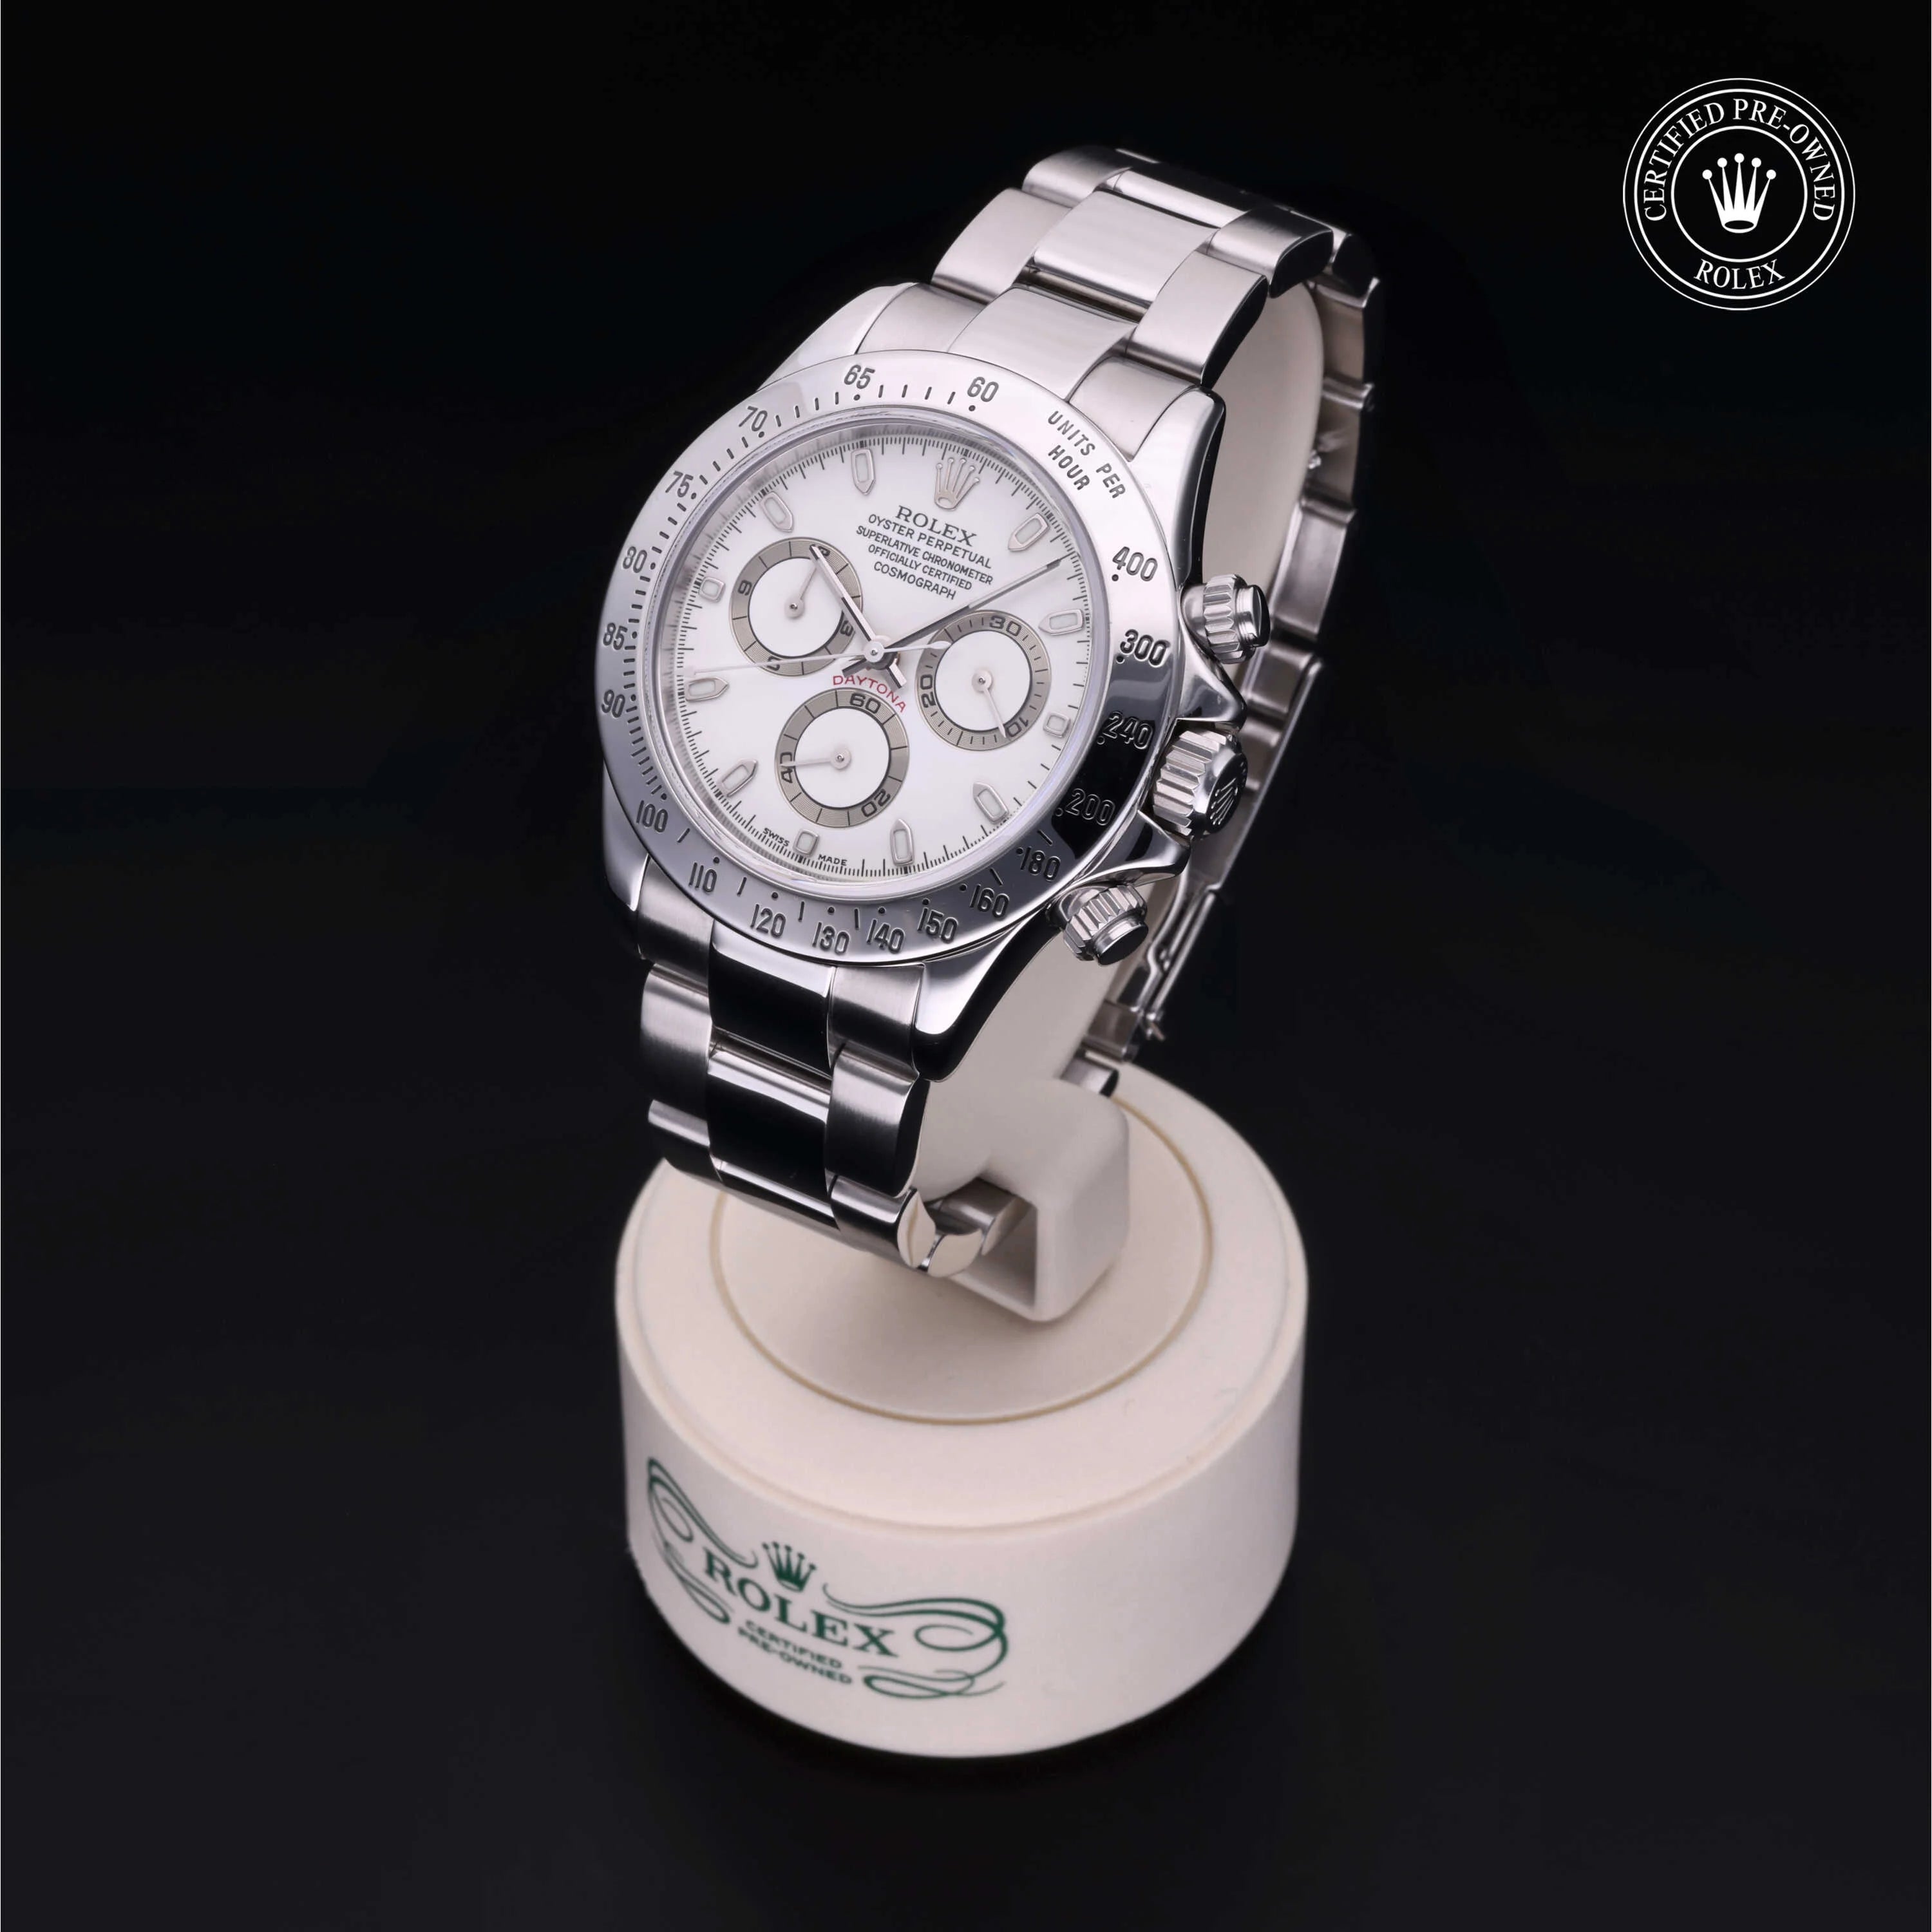 Rolex watches at Schwanke-Kasten Jewelers in Milwaukee, Wisconsin